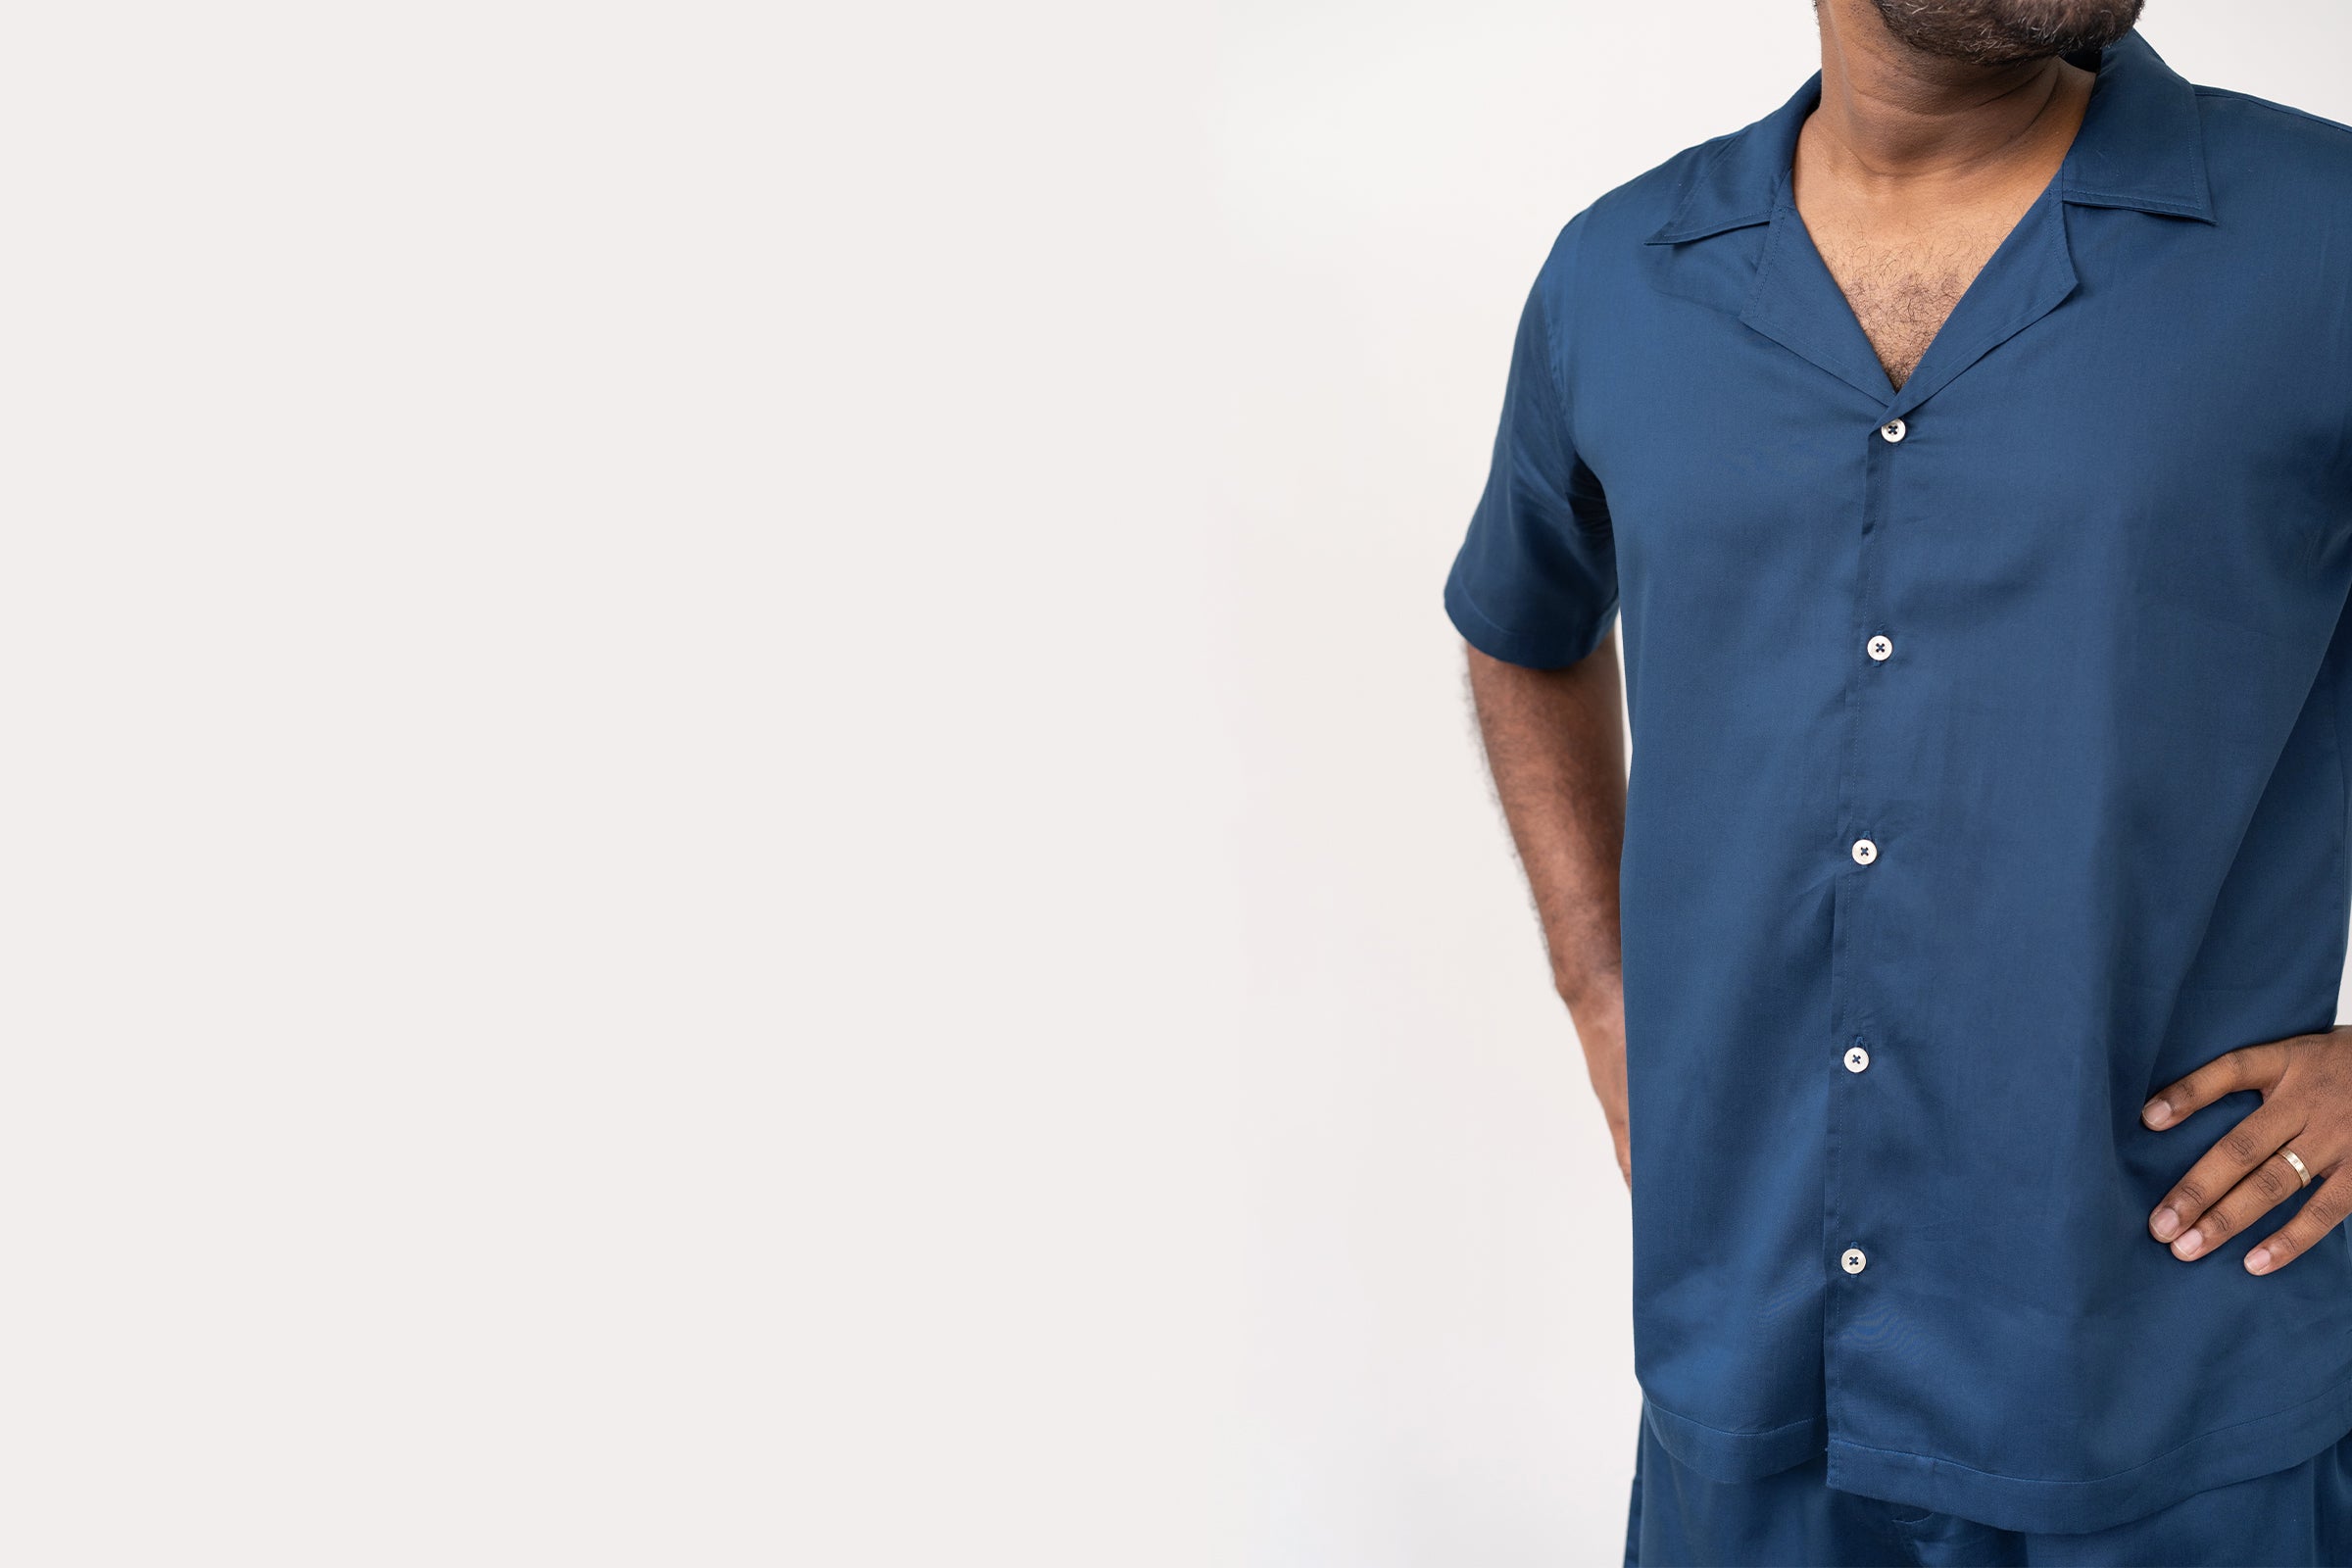 navy-organic-cotton-mens-loungewear-shirt-close-up-shot-by-sojao.jpg